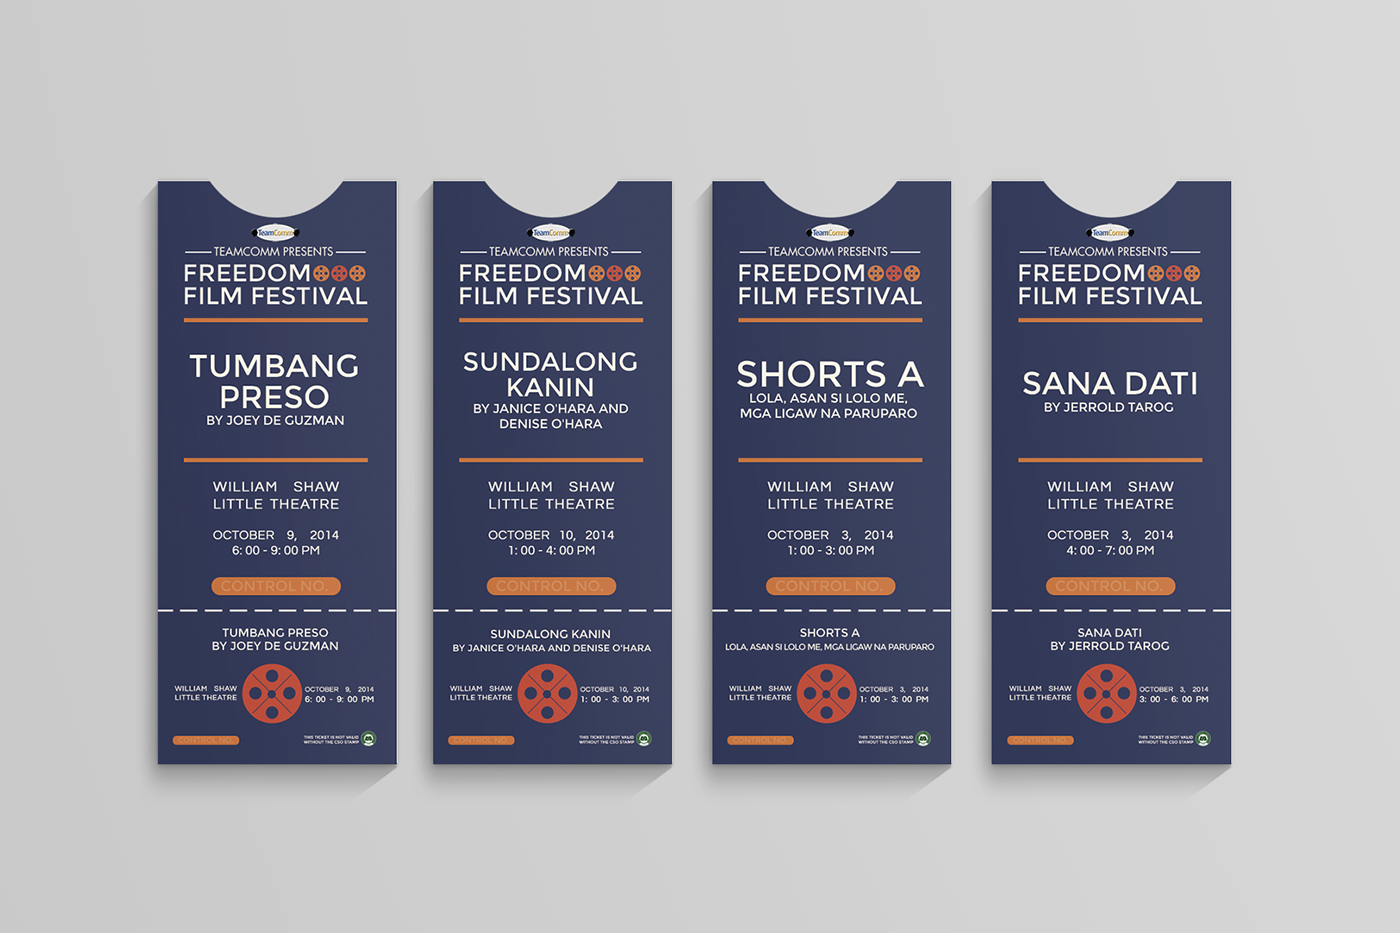 film festival teamcomm dlsu poster ticket ID